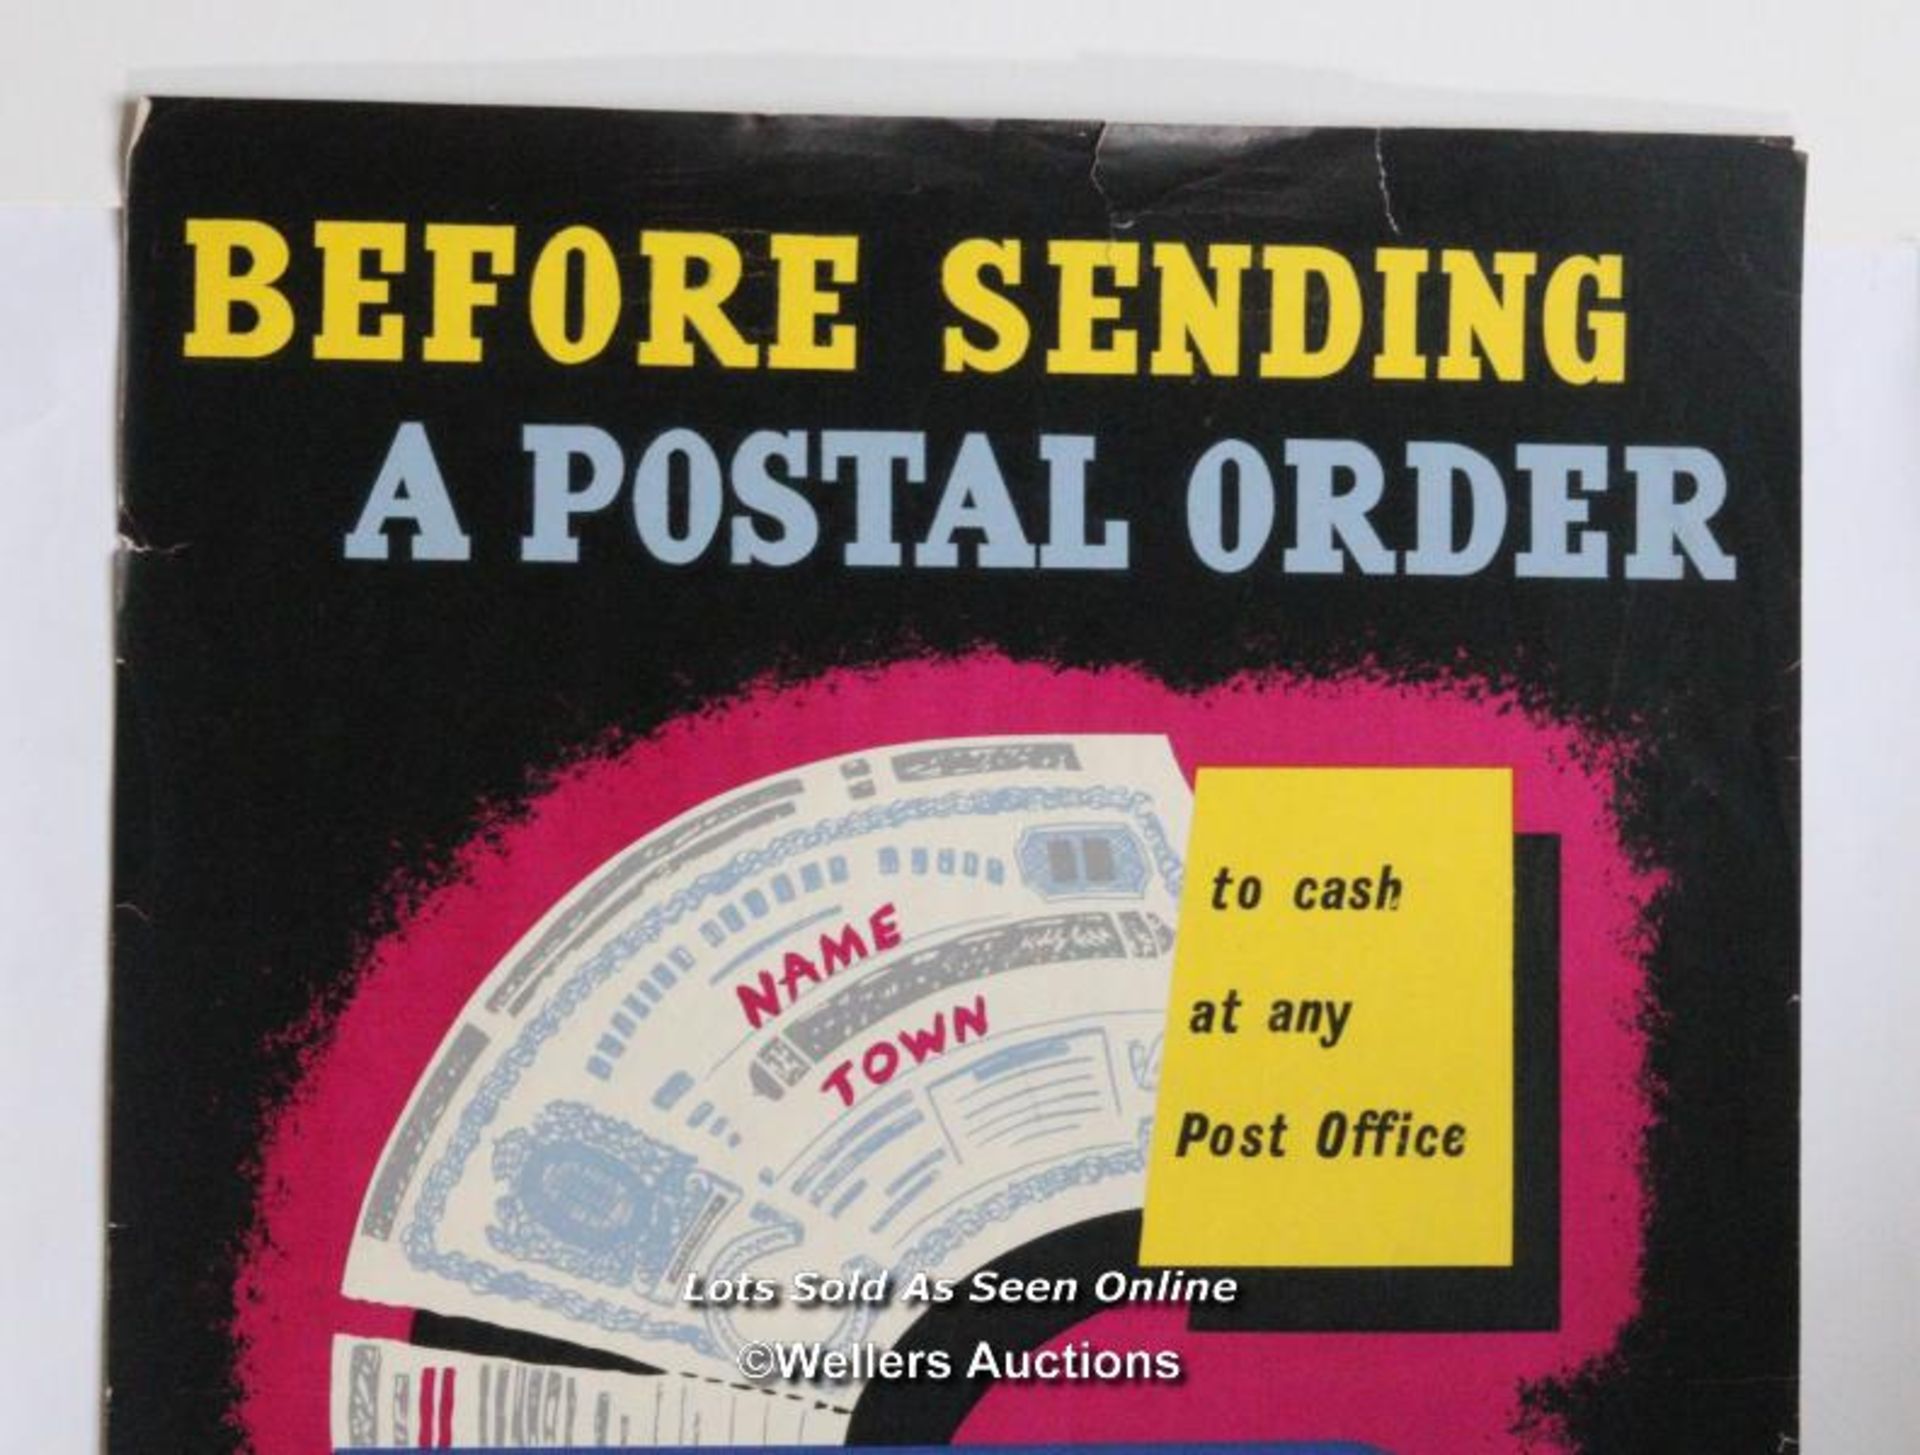 Vintage G.P.O. poster "Before sending postal order make it secure", art by Stan Kroll, c1950's - Image 5 of 9